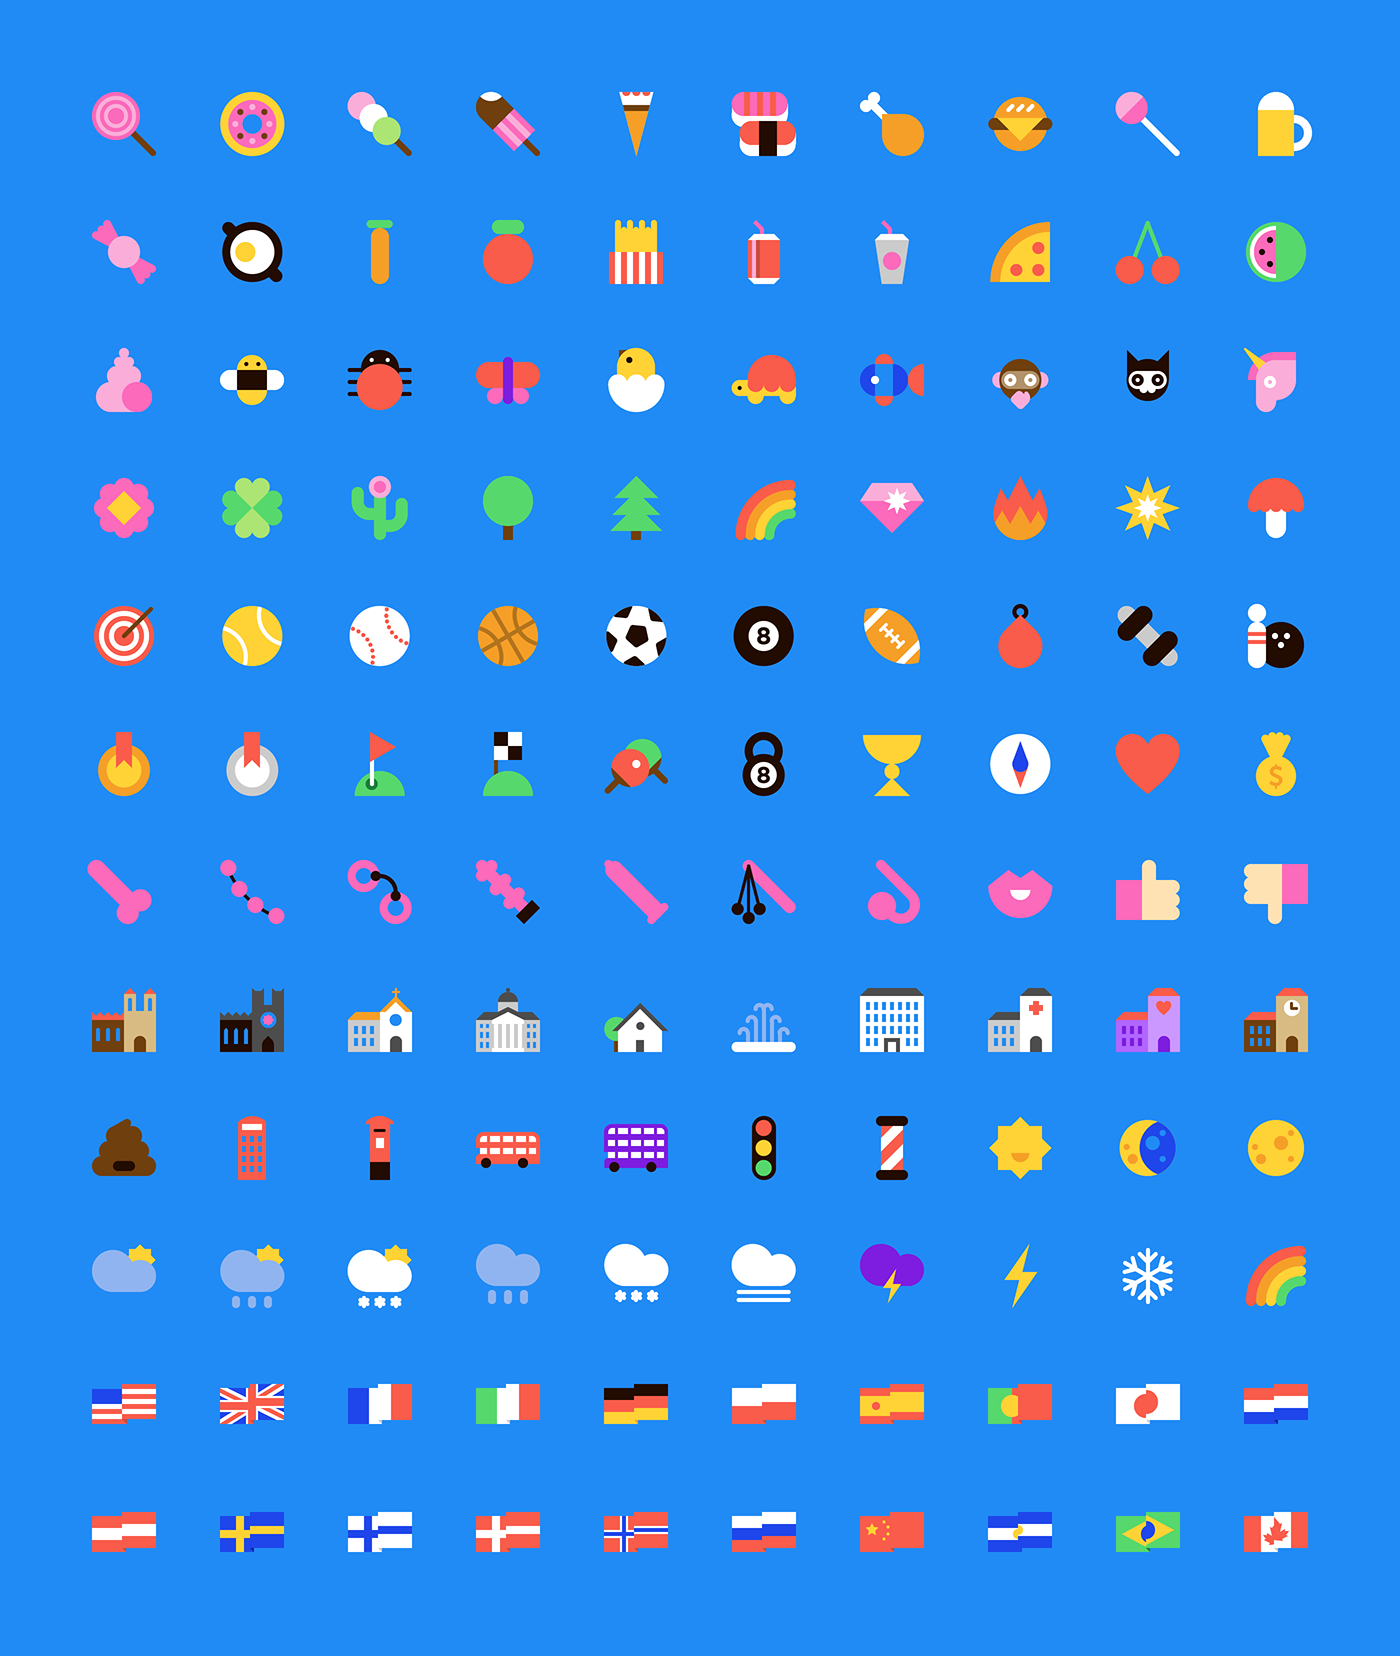 stickers Chat Emoji ILLUSTRATION  icons icon set New York usa visual design Web